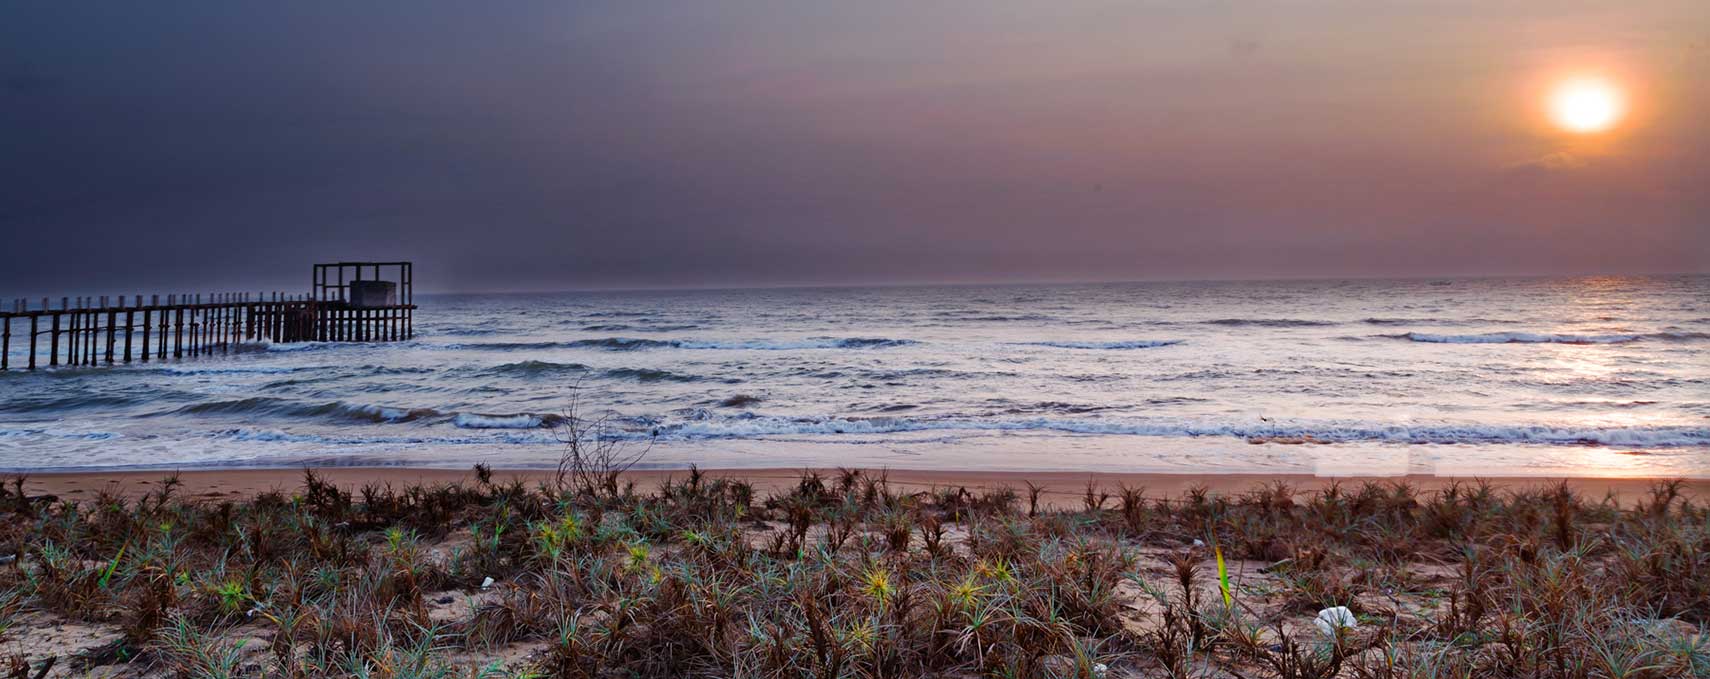 Mypadu Beach near Nellore in Andhra Pradesh